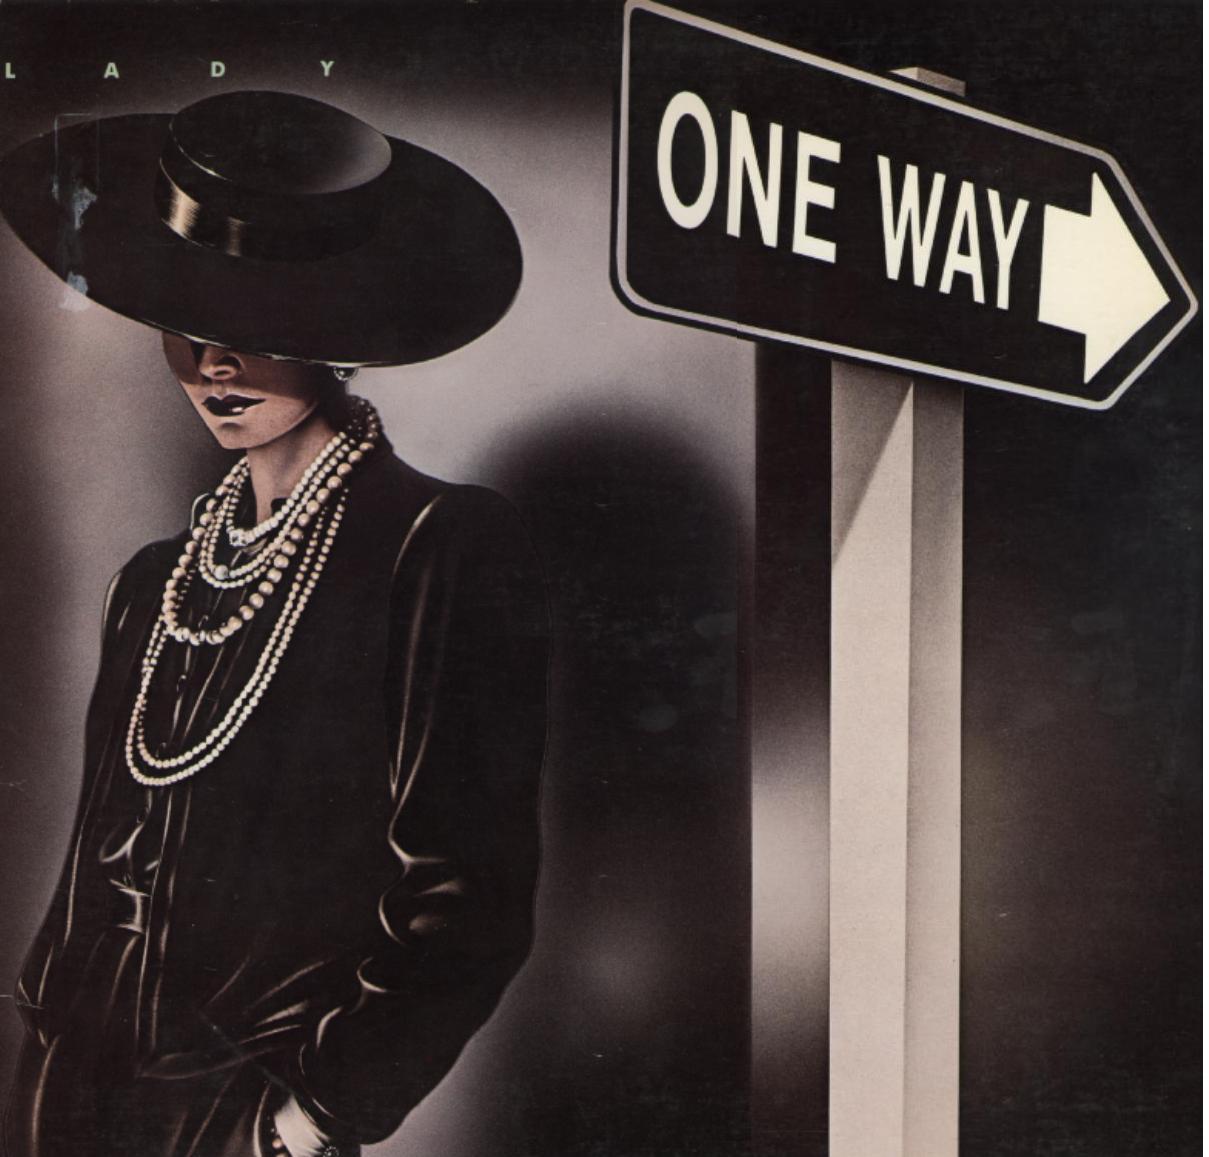 One way Lady. Винил my way 1972г Франция. One way – who's Foolin' who. Ты моя леди фото. Dont way